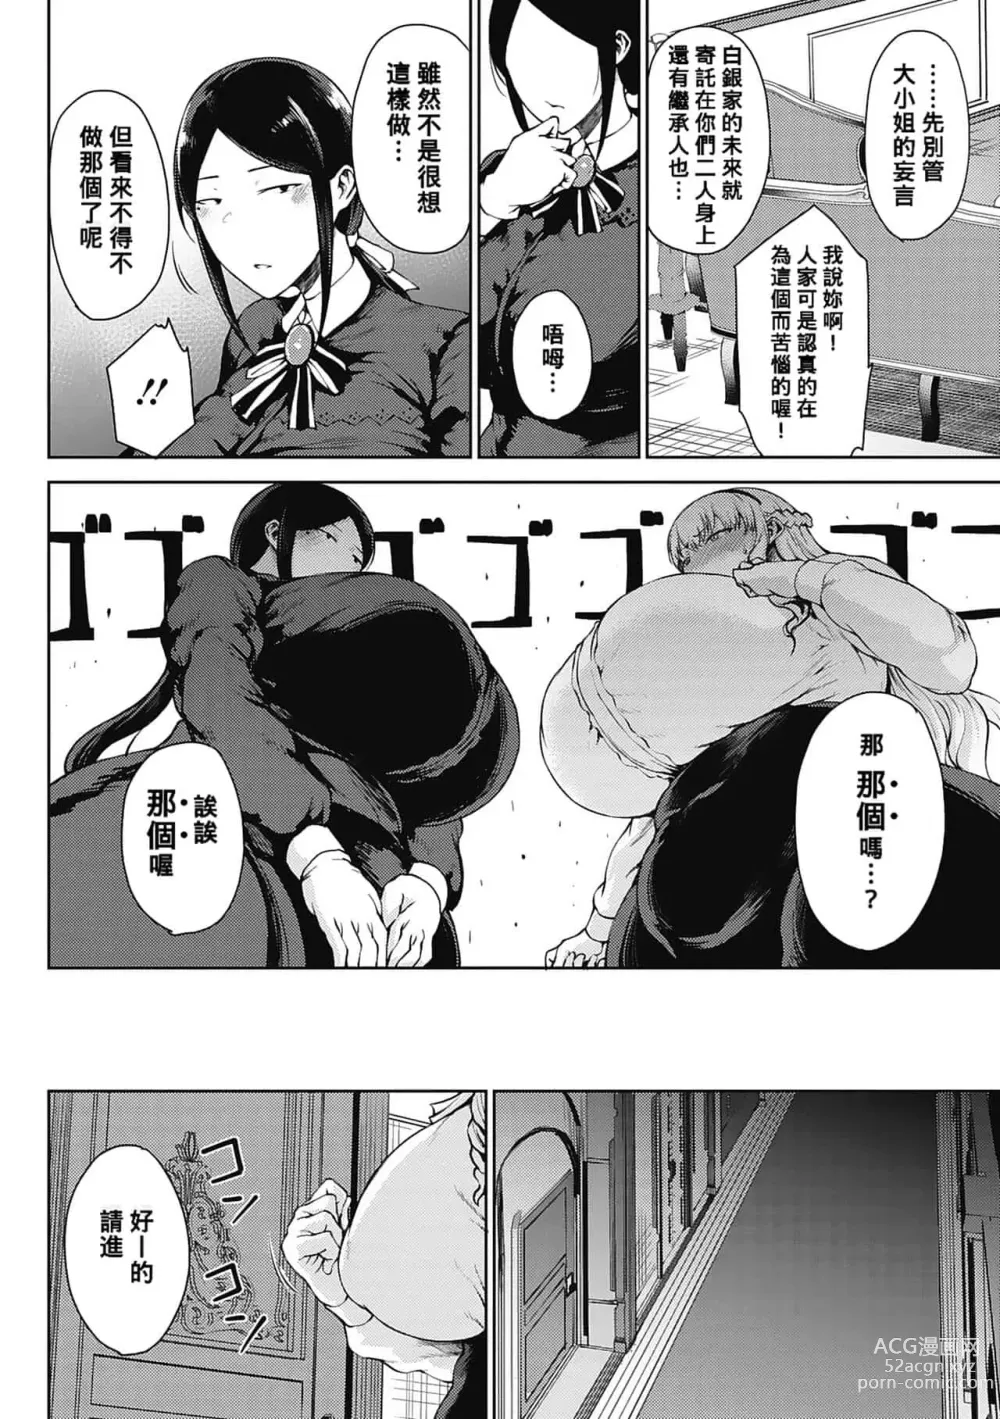 Page 9 of manga 潤愛